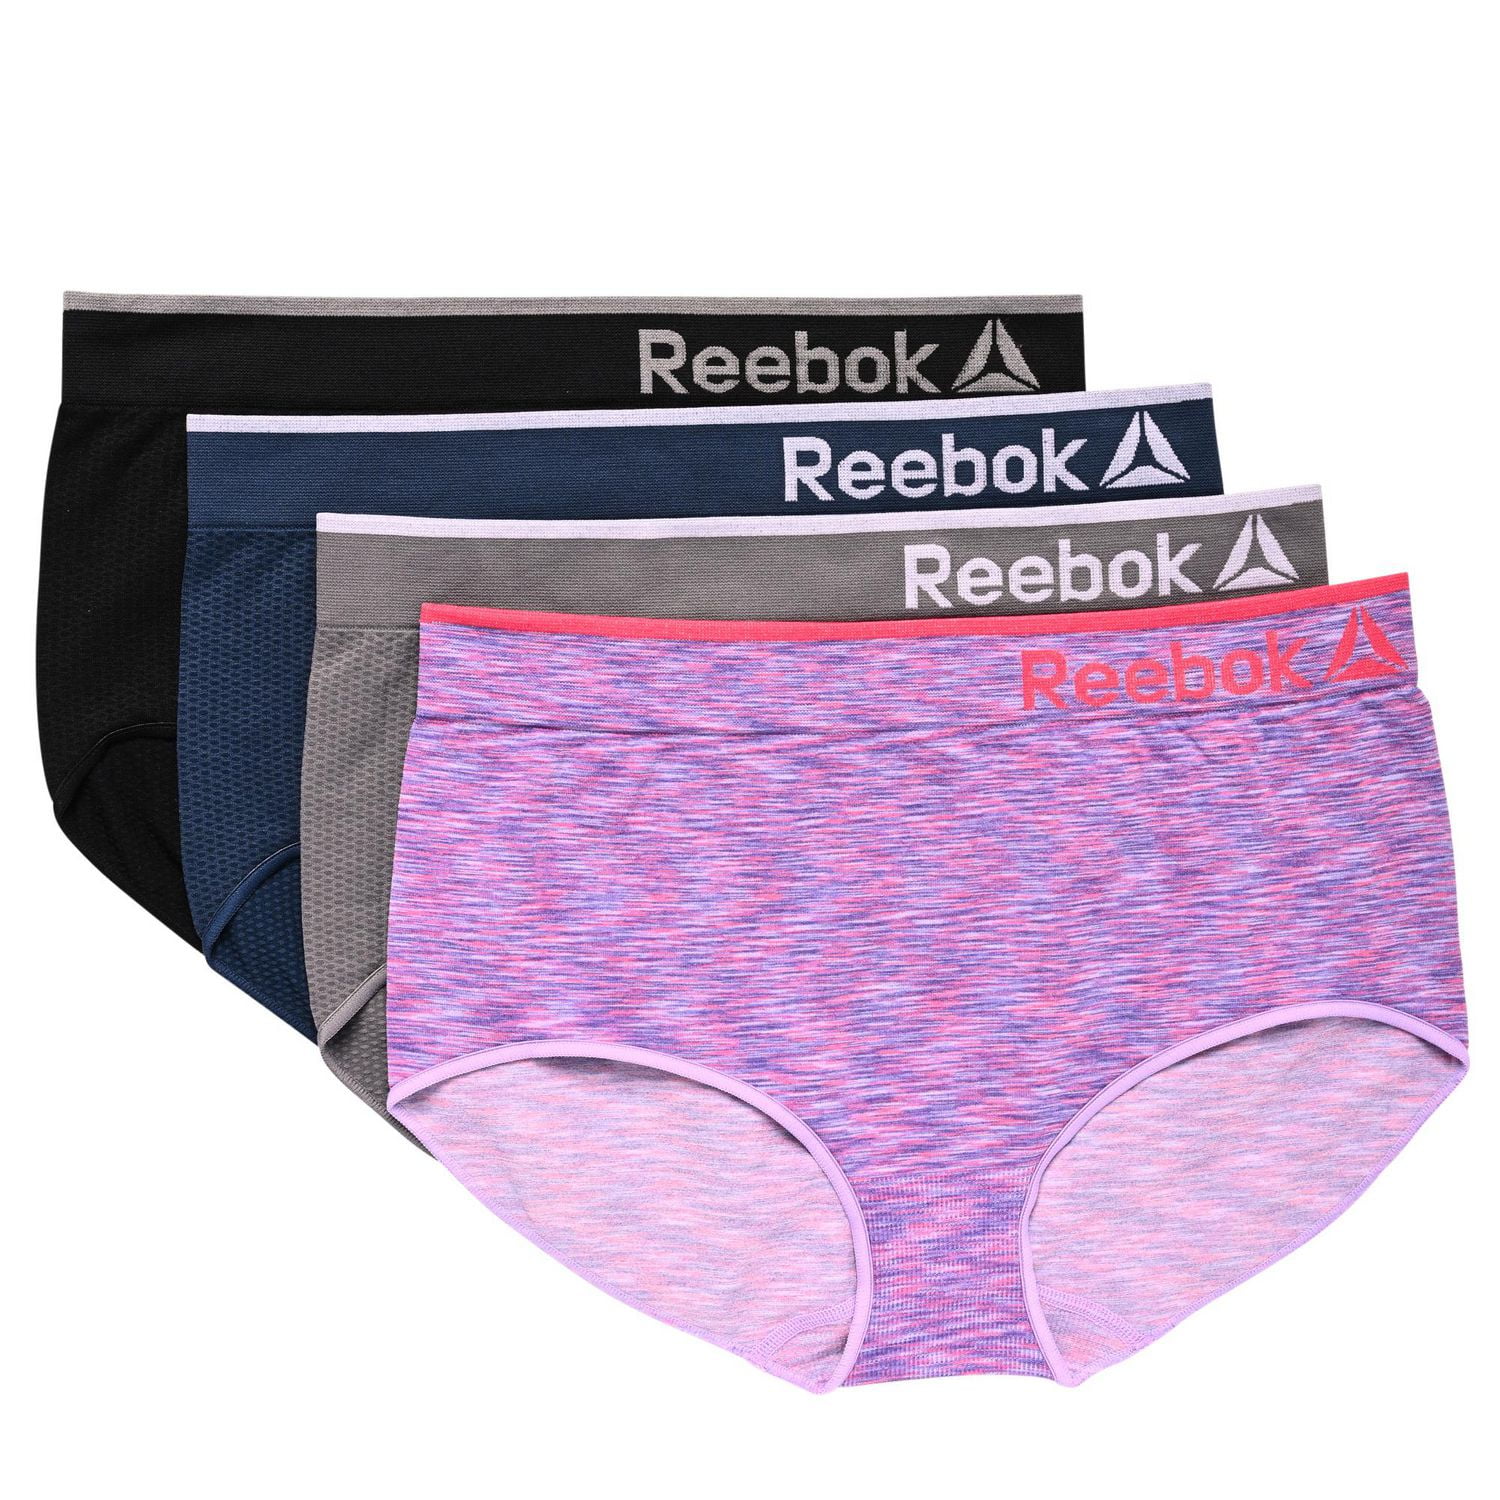  VBFOFBV Women's Underwear, Briefs for Women, Rock and